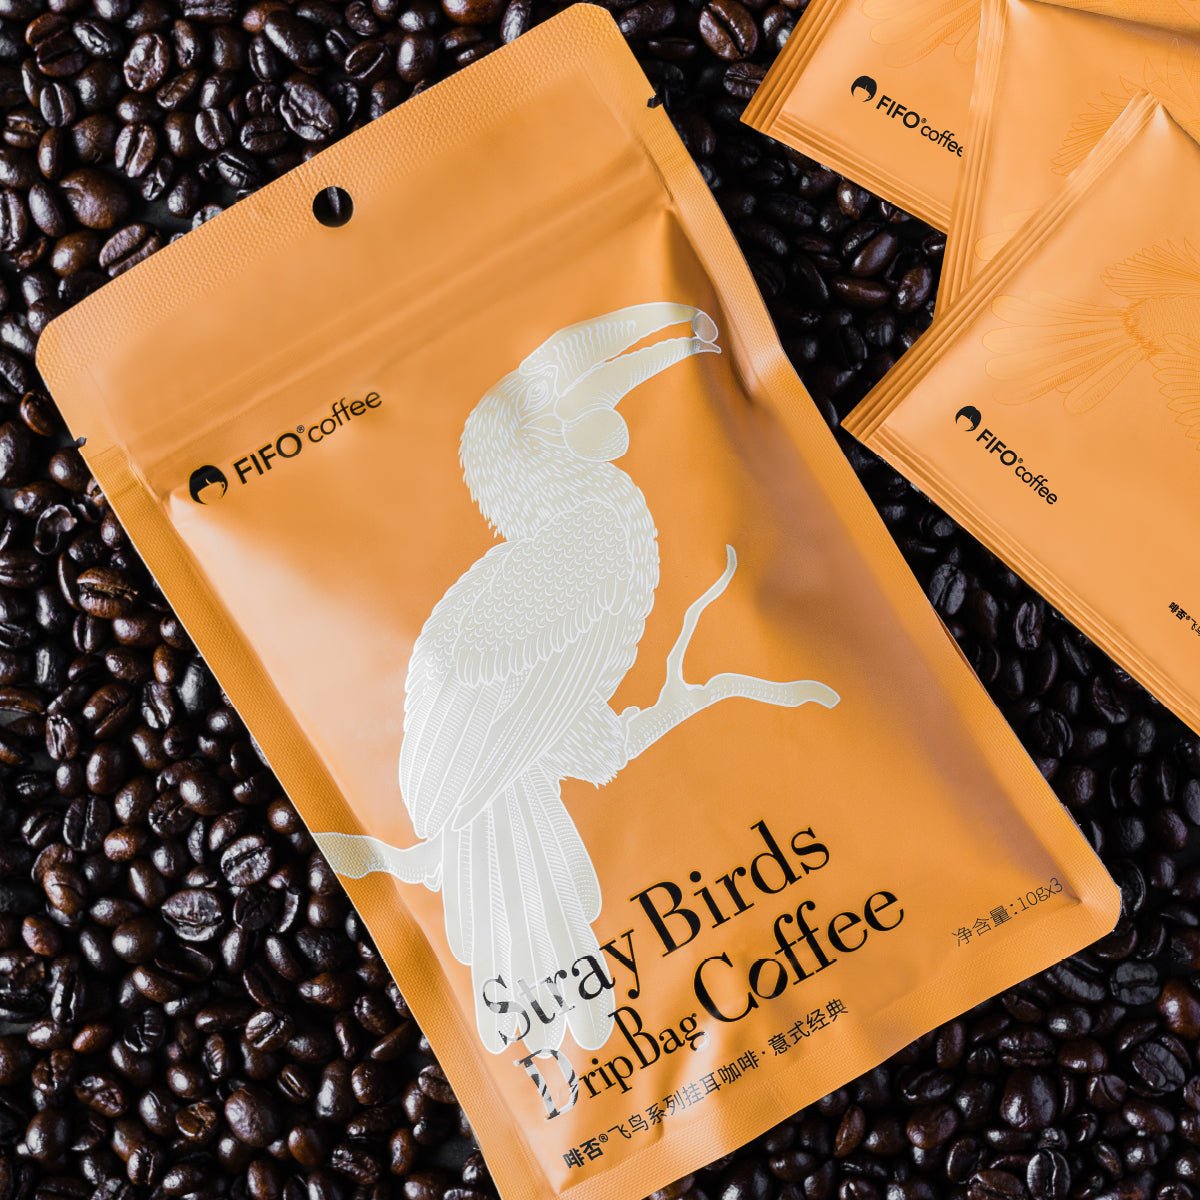 Stray Birds Dripbag Italian Black Coffee 210g (21 Bags) - 0cm